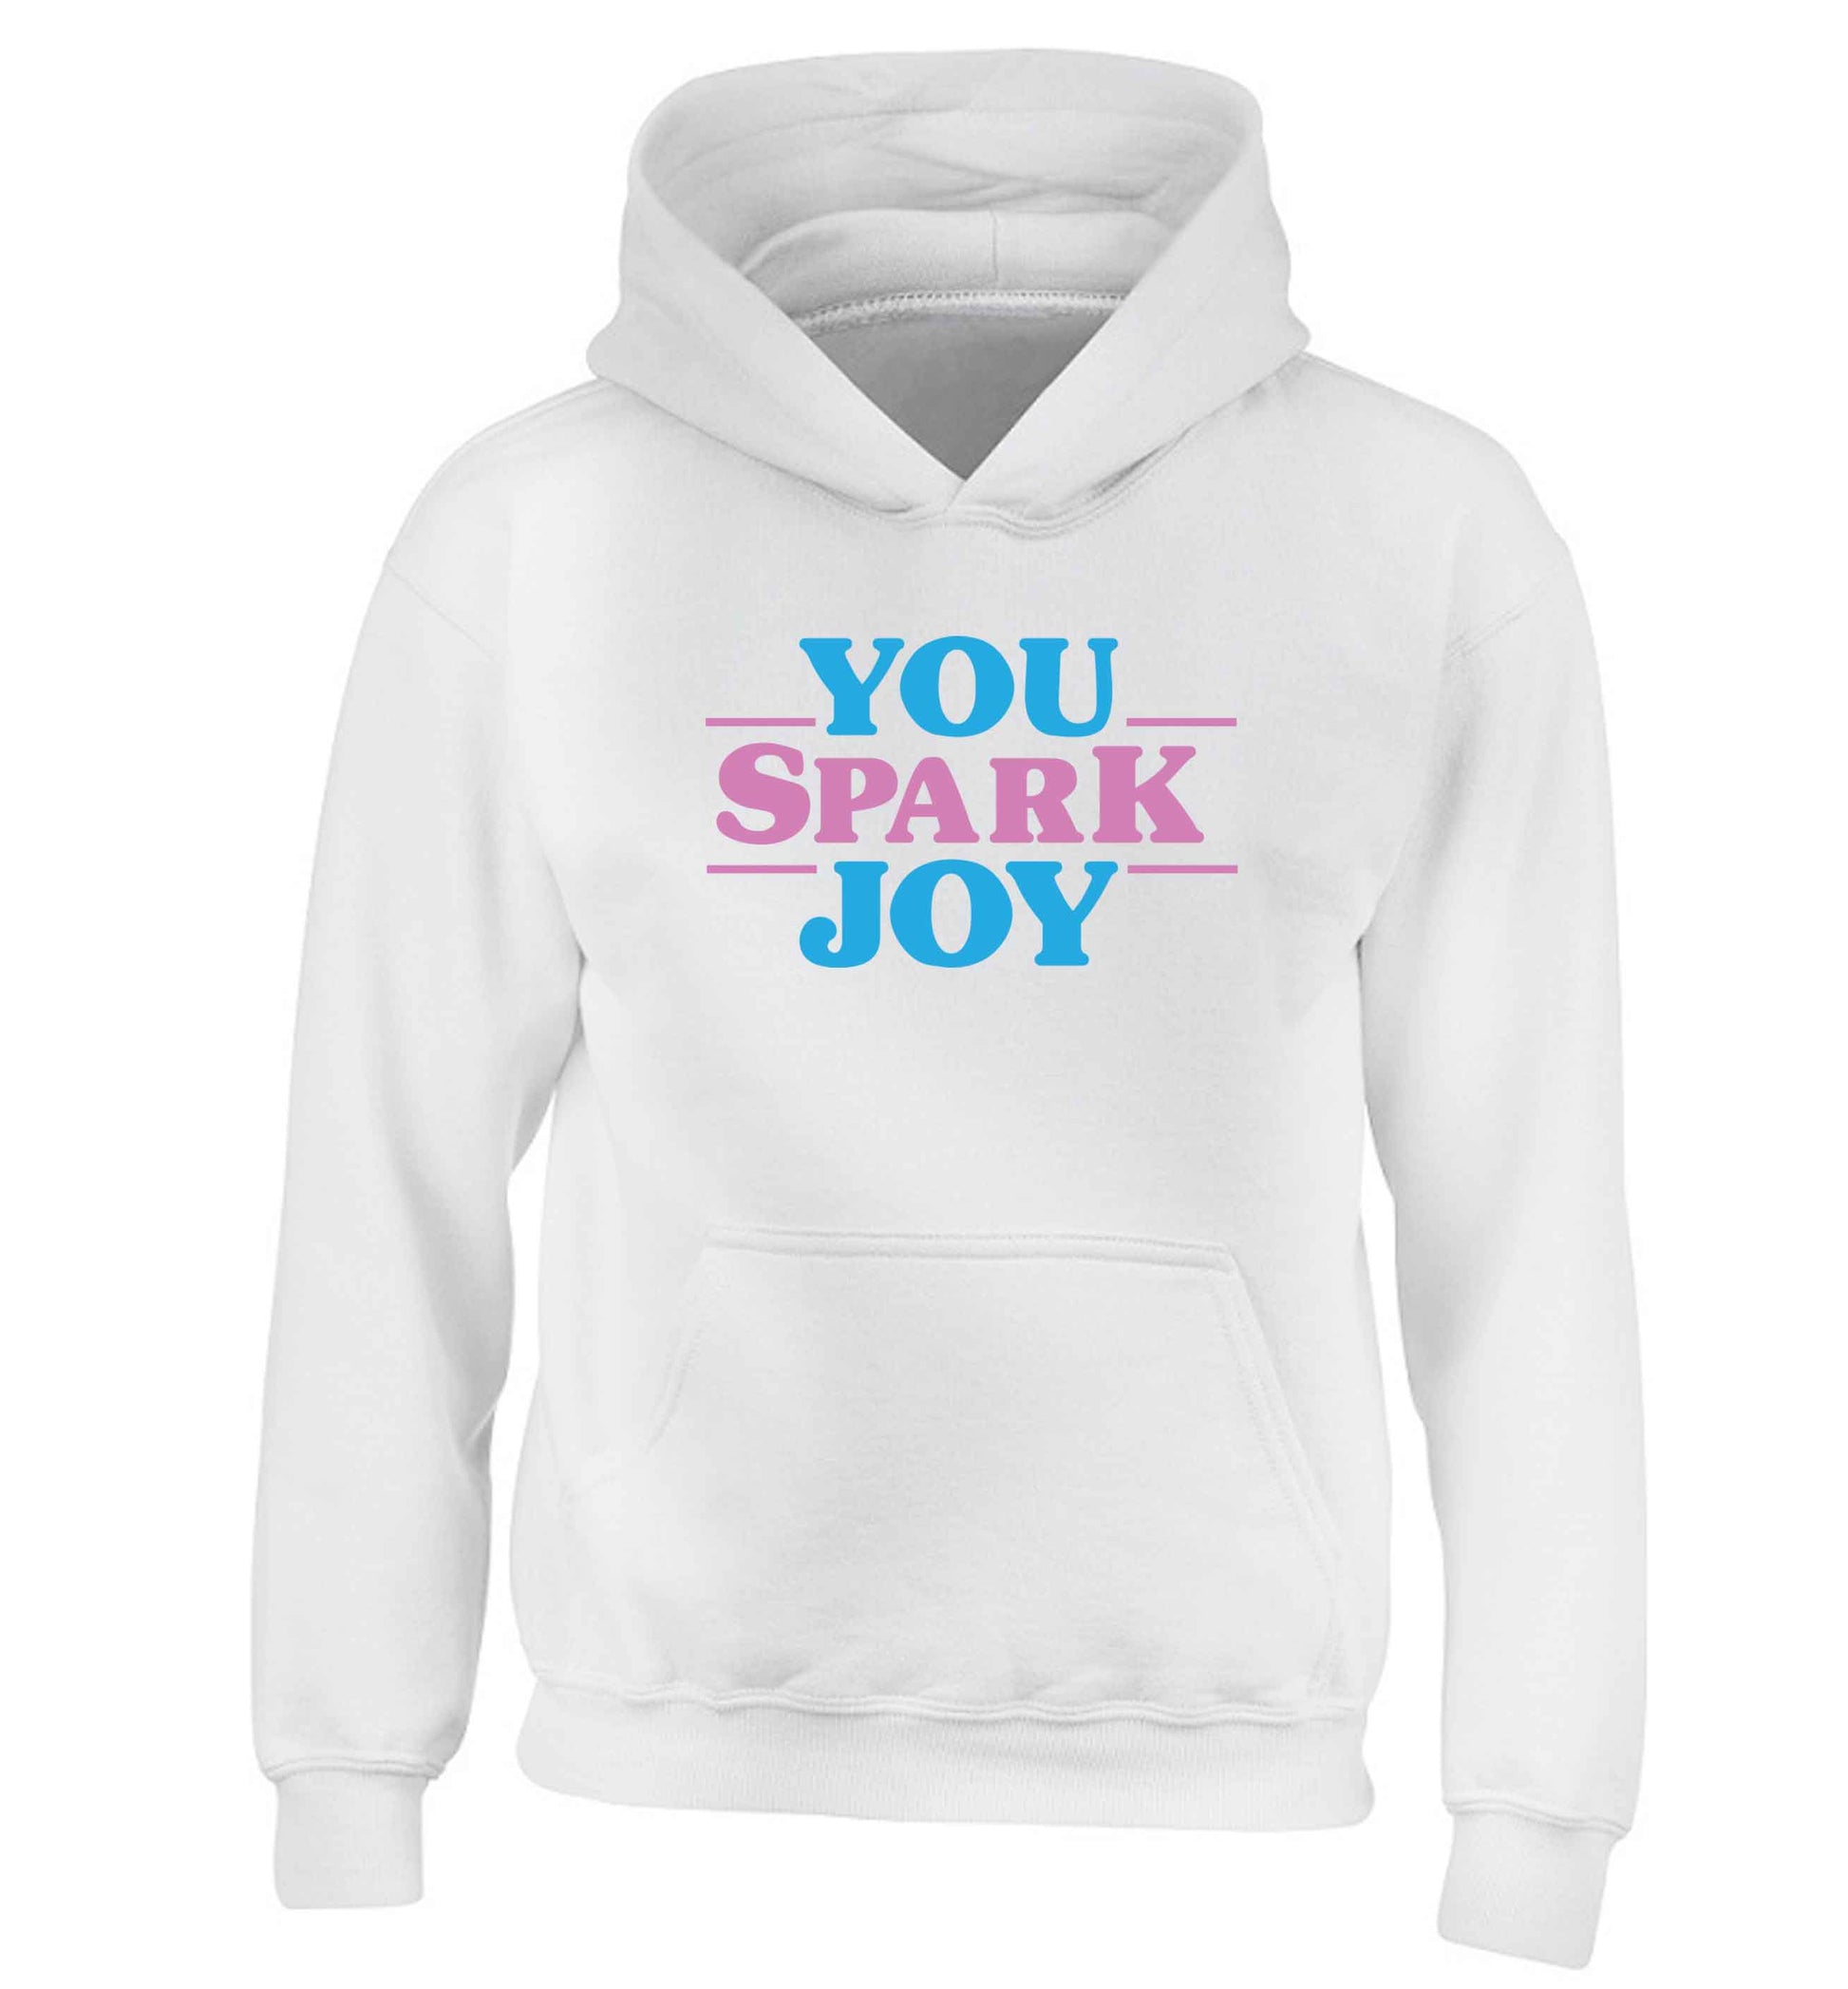 You spark joy children's white hoodie 12-13 Years